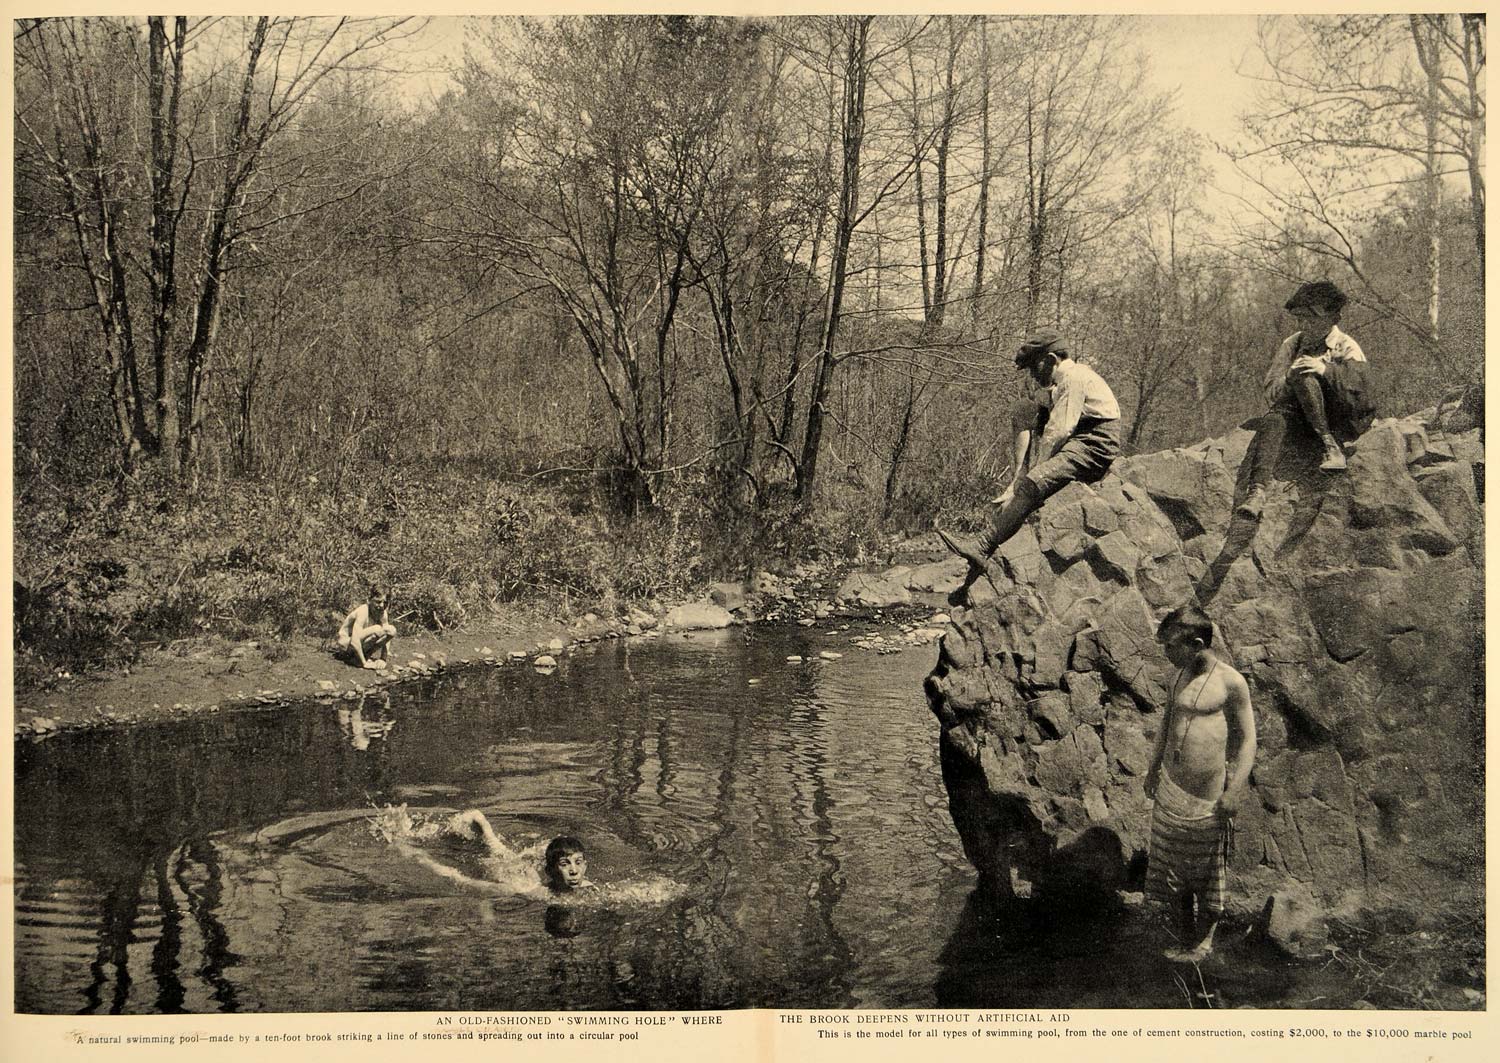 1905 Article Outdoor Natural Manmade Swimming Pools - ORIGINAL CL5